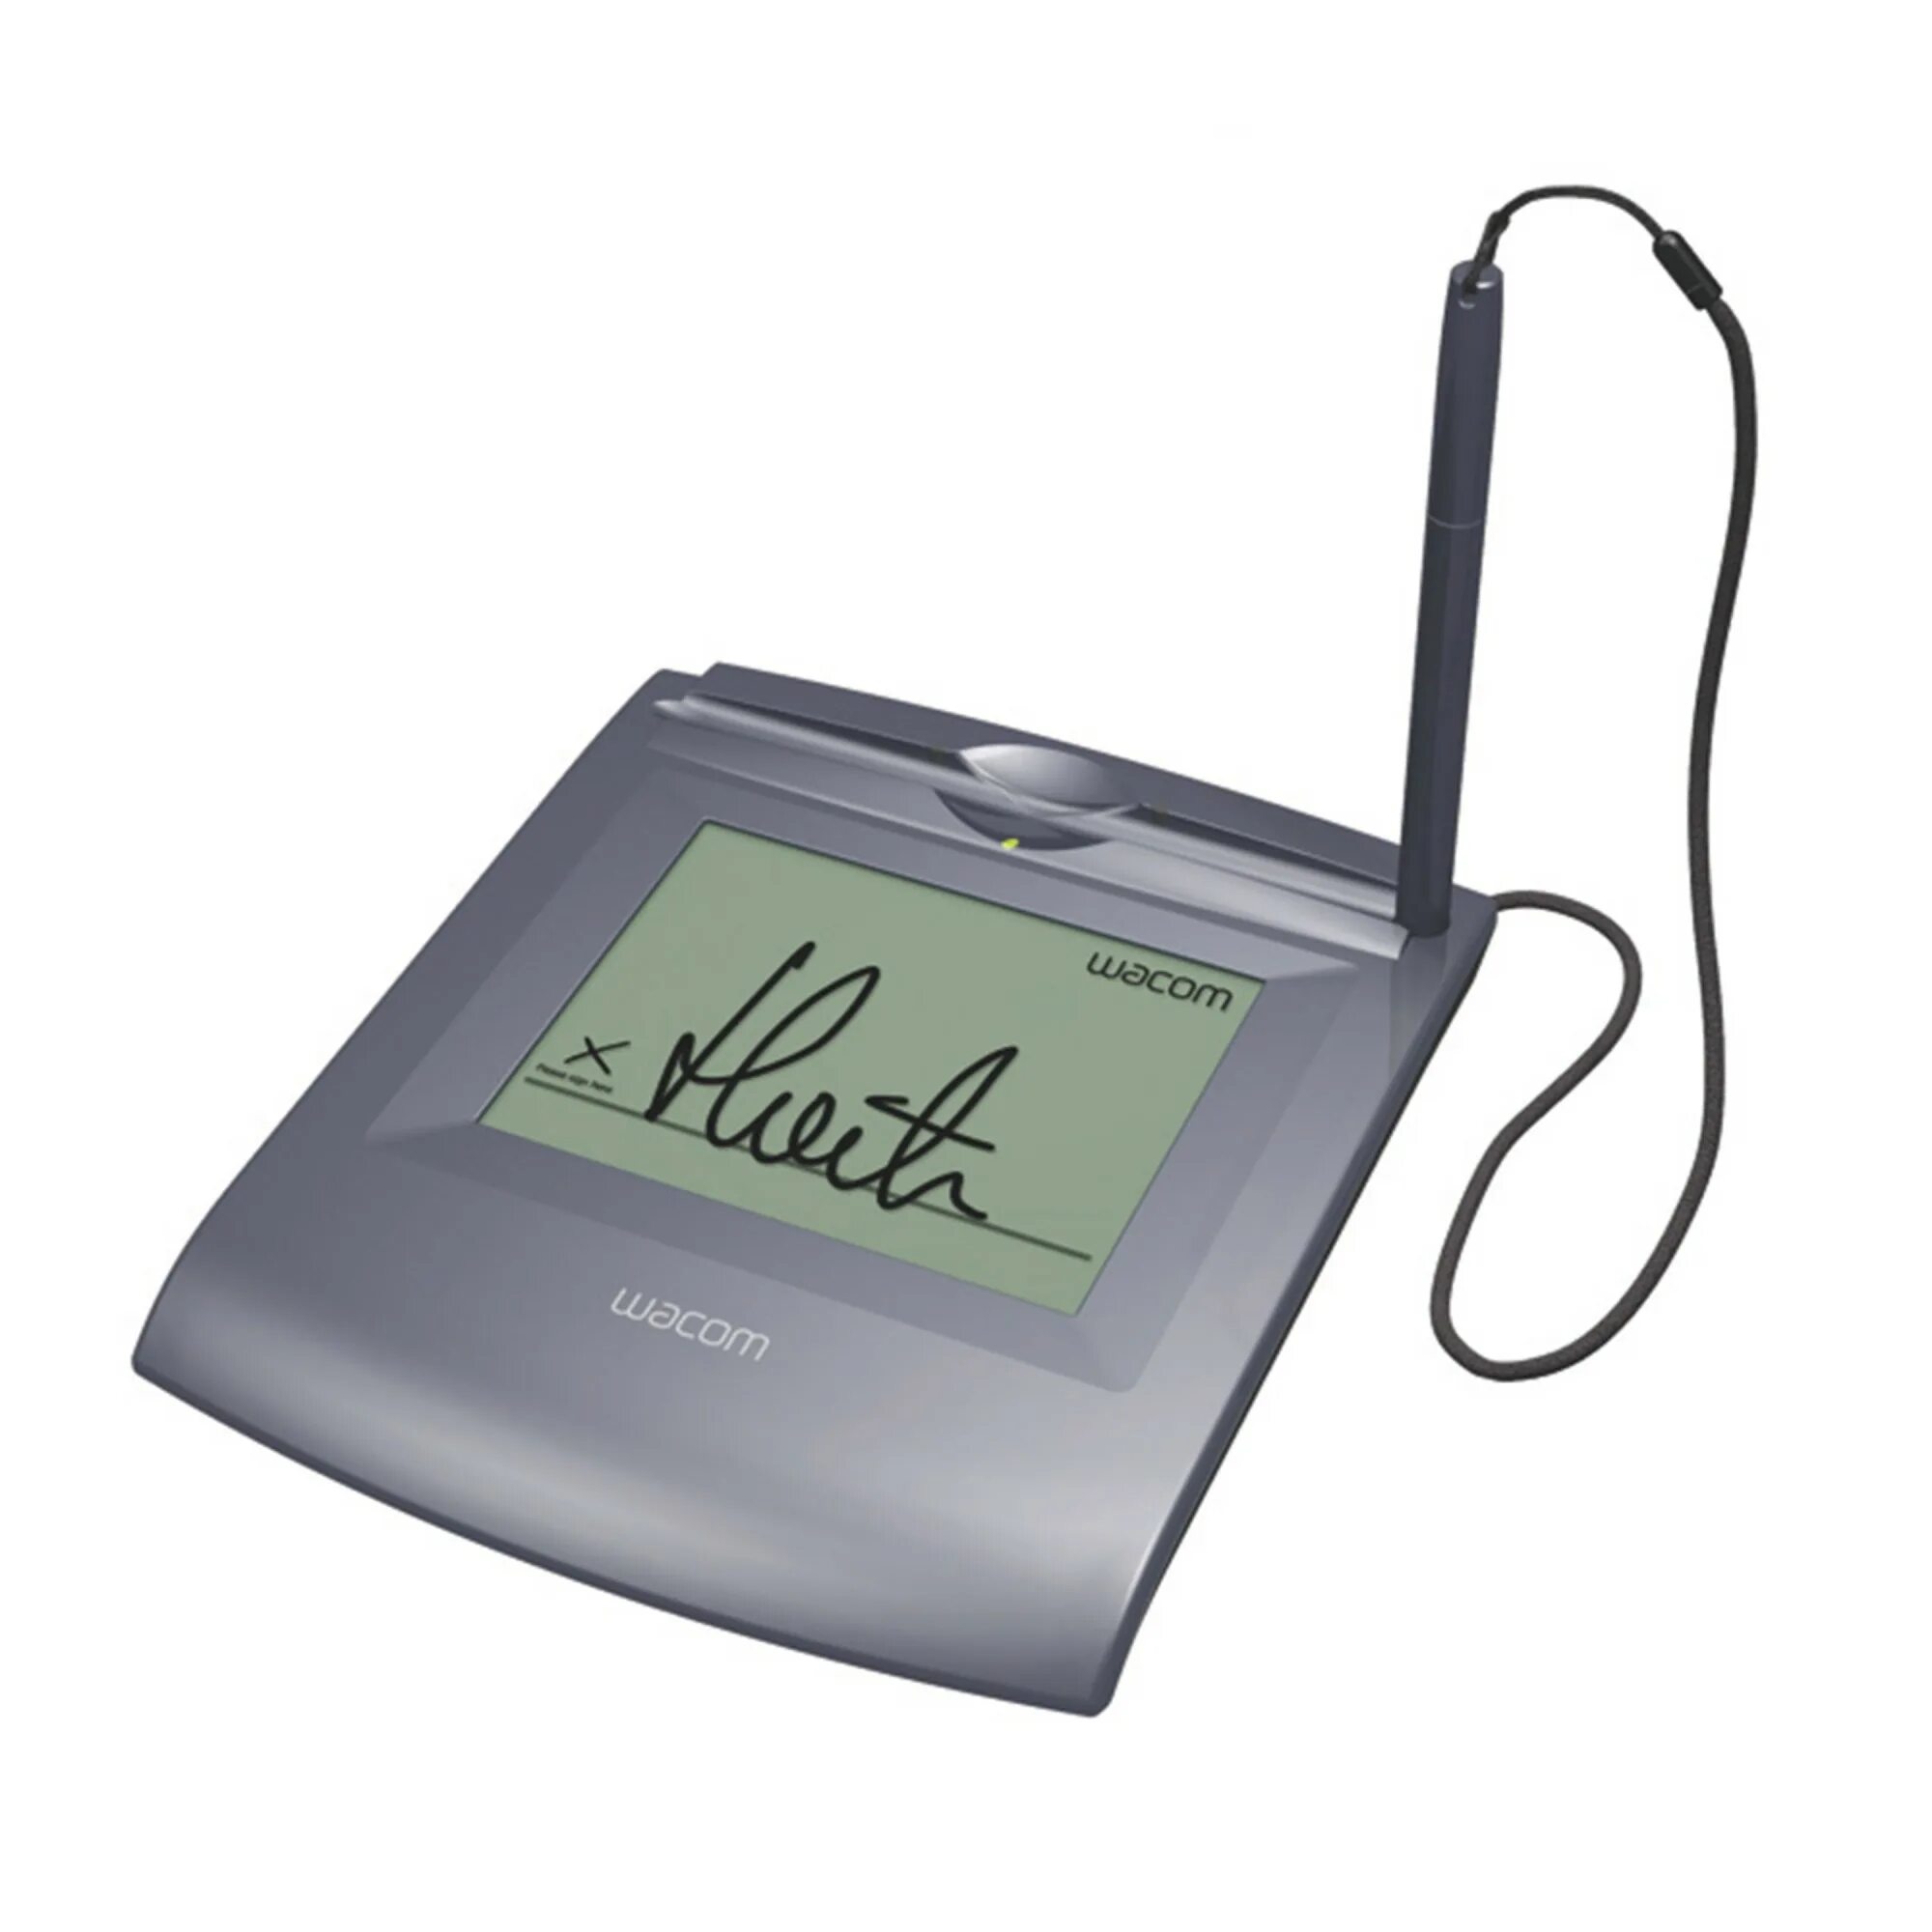 Wacom stu. Wacom Stu 500. Планшет для подписи. Графический планшет для подписи документов. Графический планшет для электронных подписей Wacom.